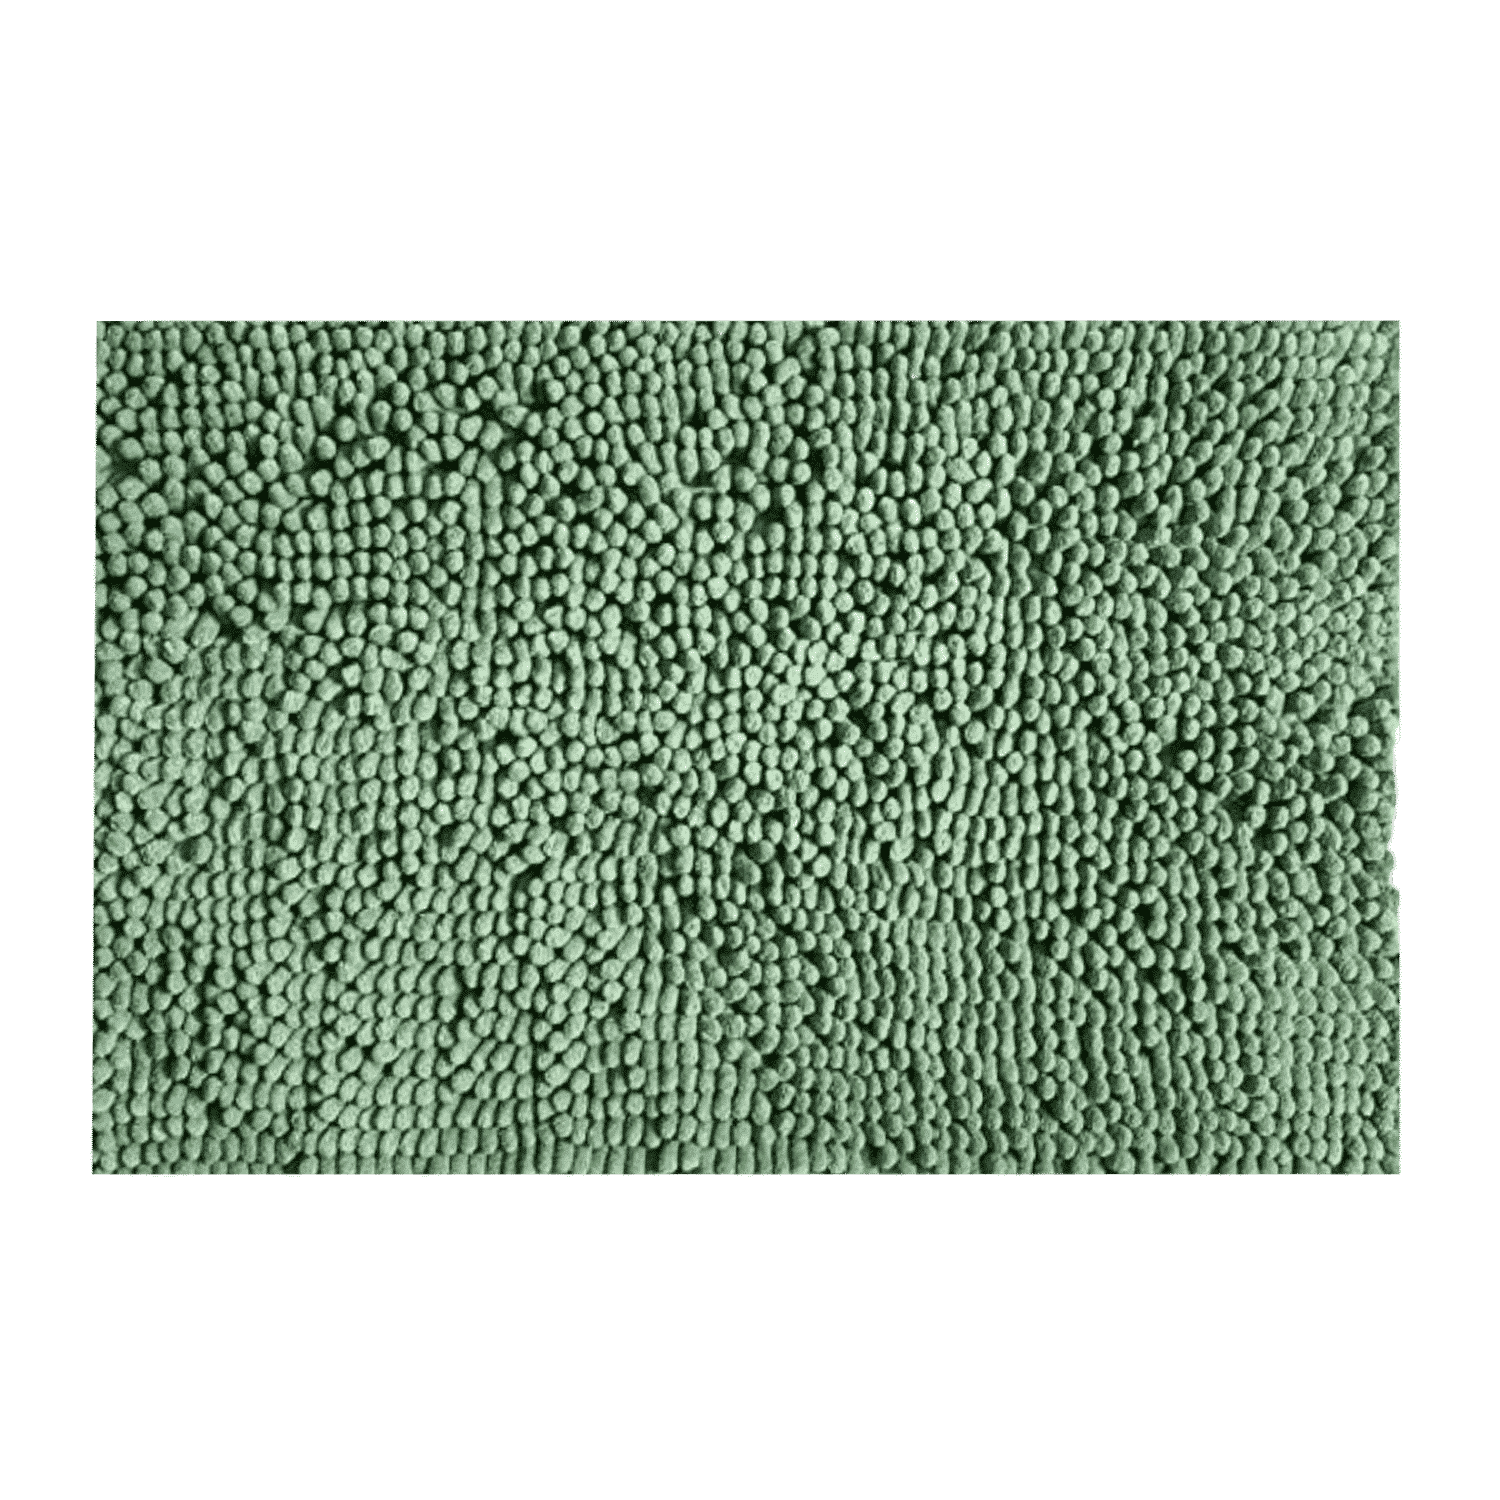 Tappeto-da-bagno-passatello-shaggy-verde-oliva-poliestere-microfibra-50x80cm-60x120cm-tinta-unita